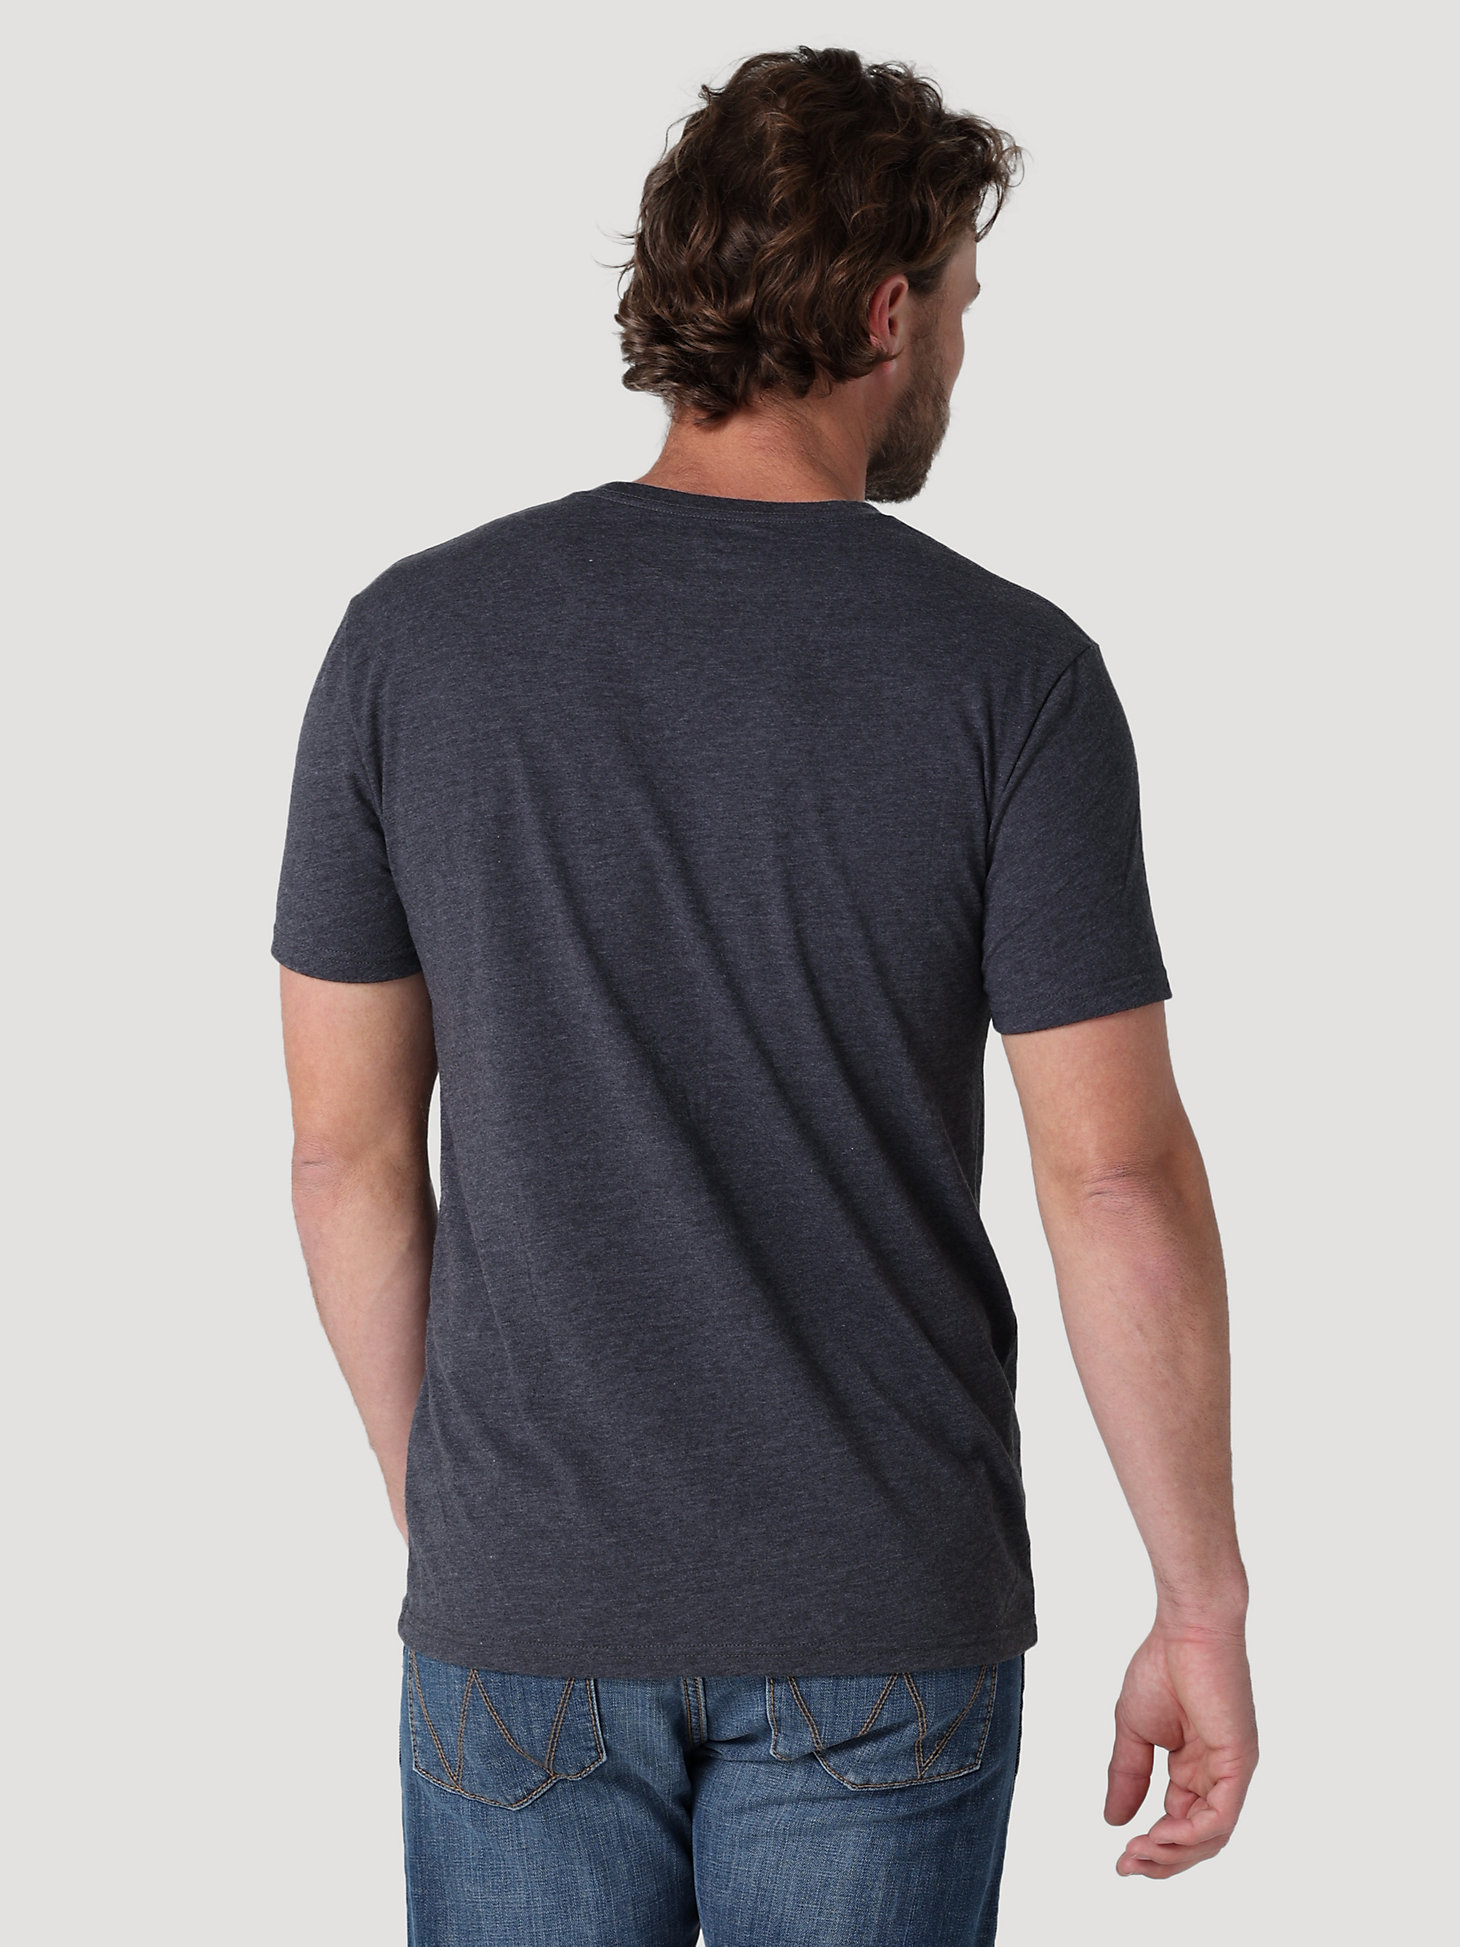 Men's Bronco Desert Graphic T-Shirt in Charcoal Heather alternative view 2